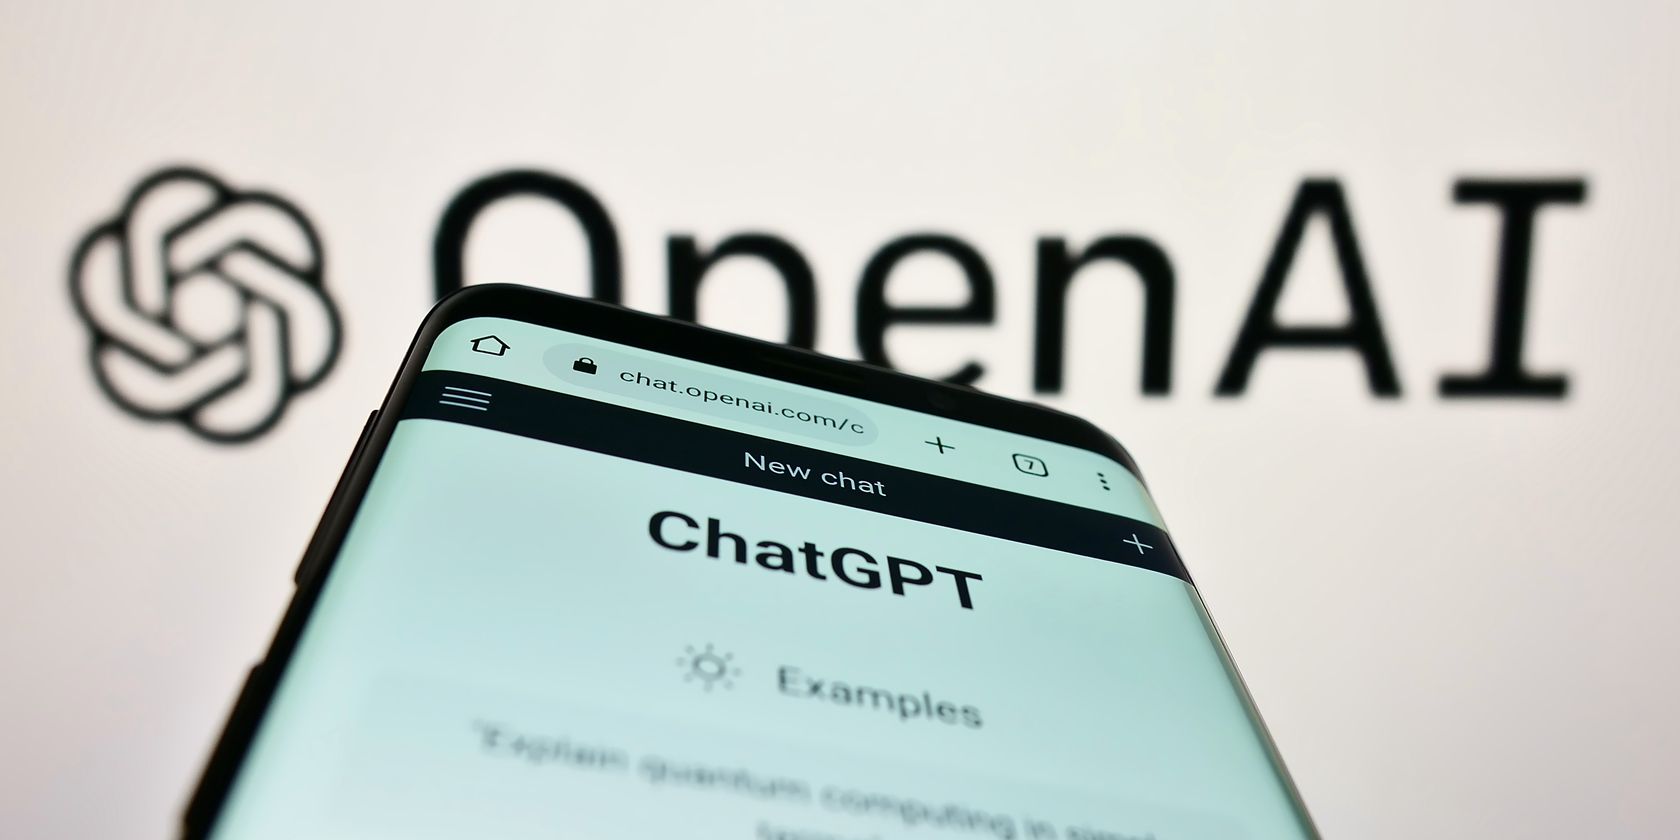 chatgpt openai logos 智能手机功能